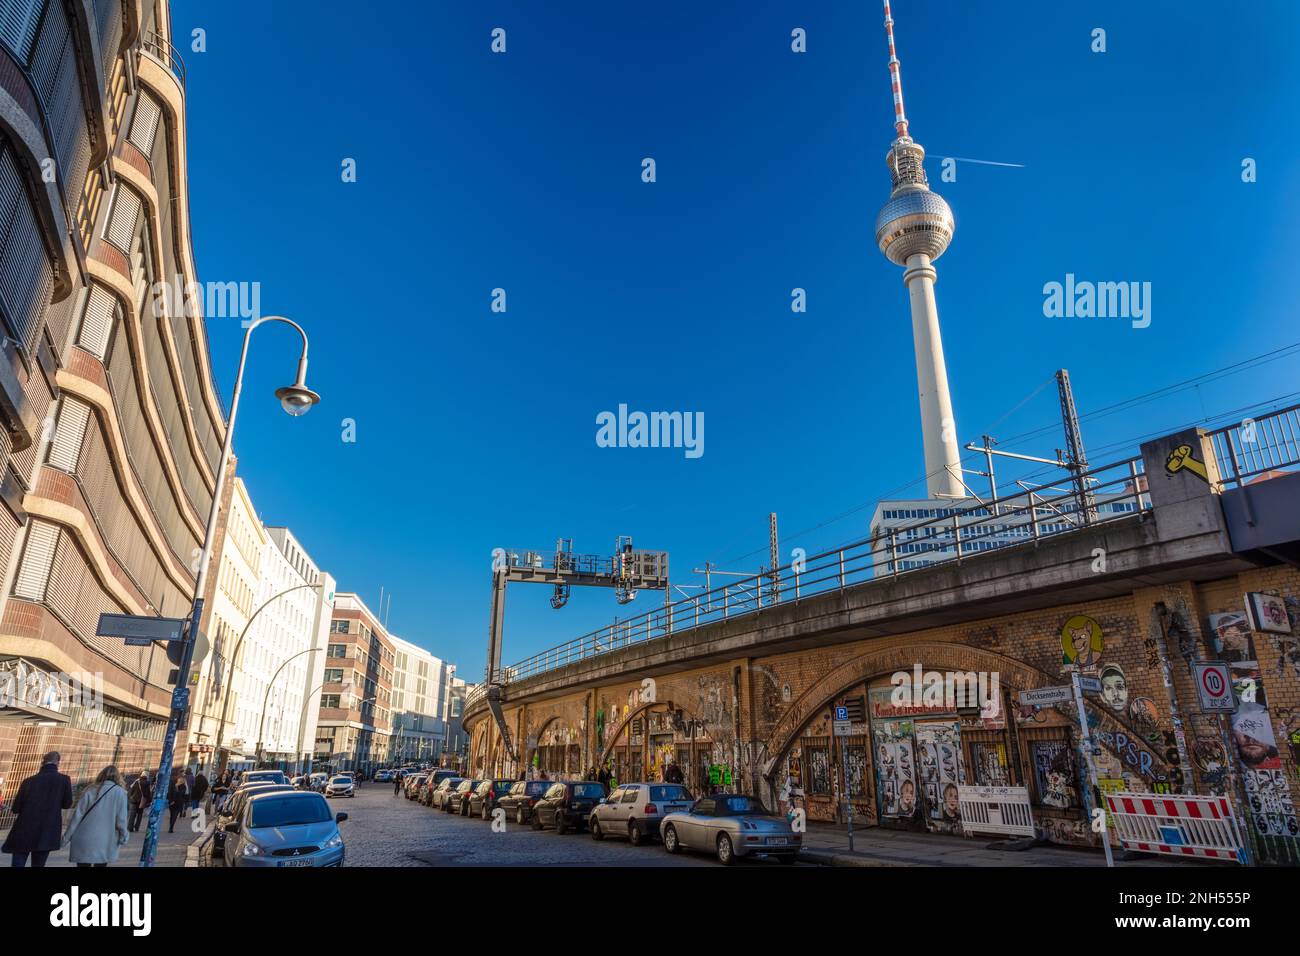 DIRCKSENSTRASSE, BERLIN, GERMANY, 16 FEBRUARY 2019: S-Bahn Elevated Railway line, Berliner Fernsehturm Television Tower, Berlin, Germany Stock Photo